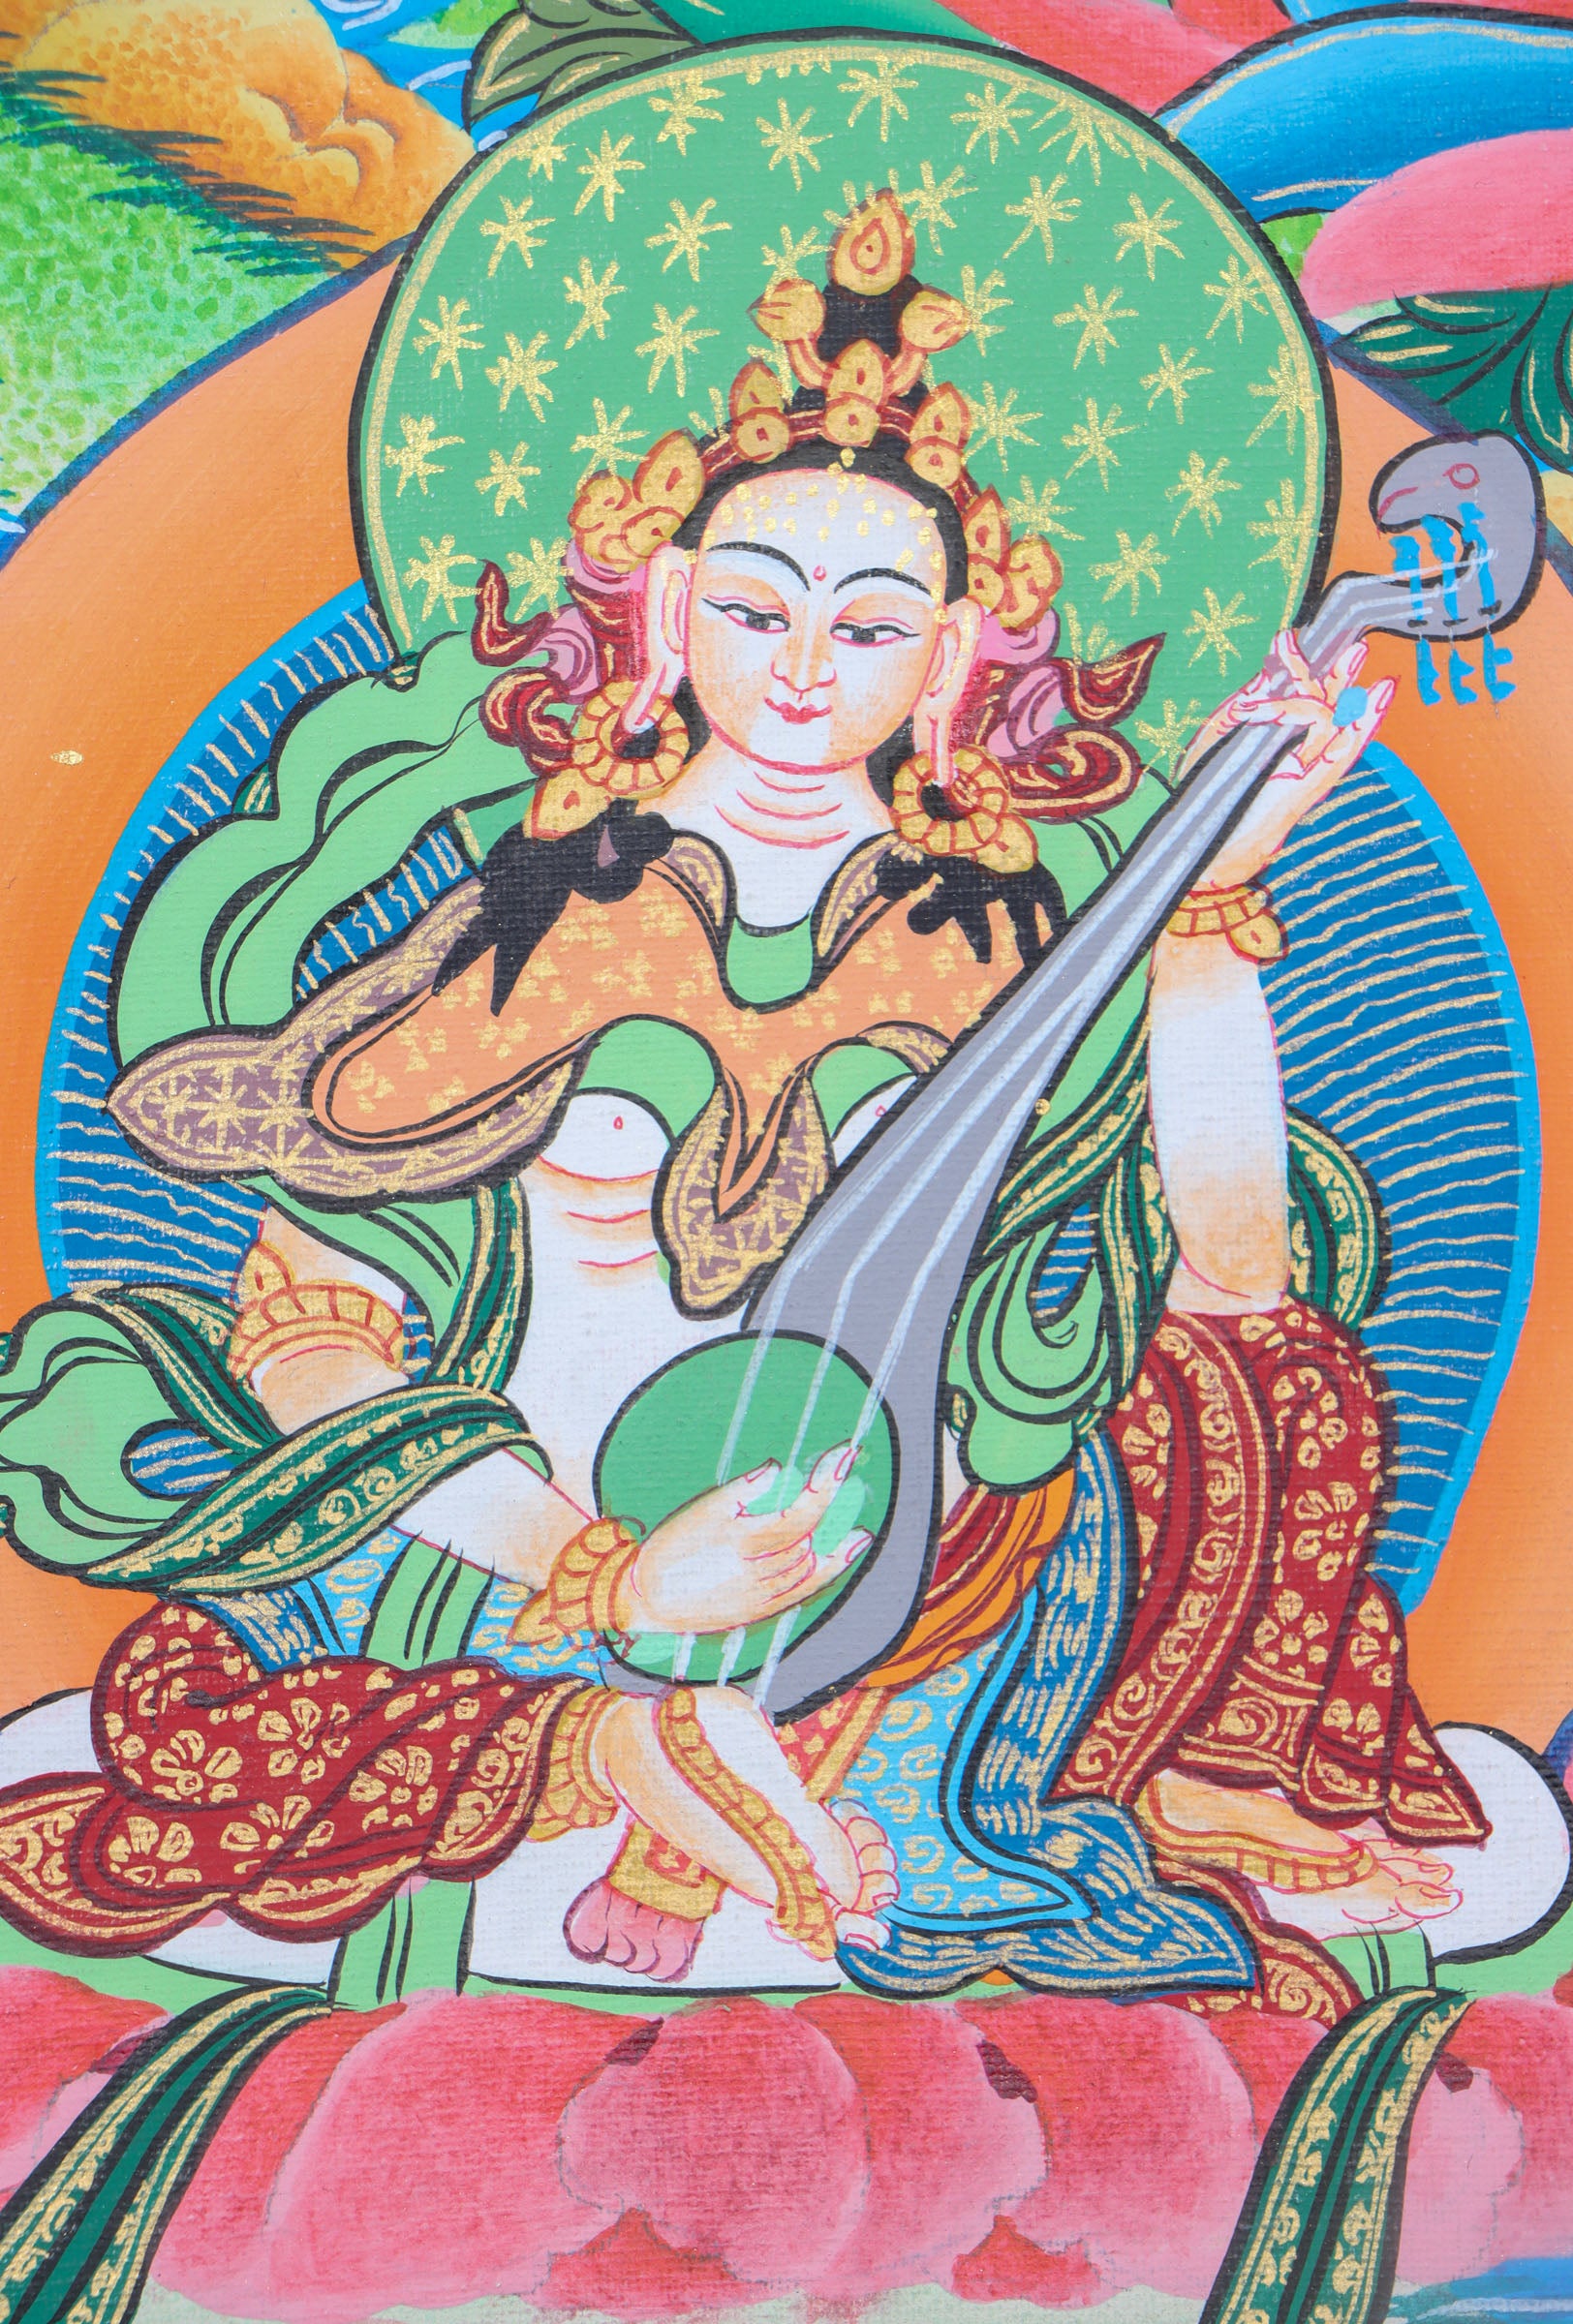 Green Tara Thangka Painting for spirituality growth.